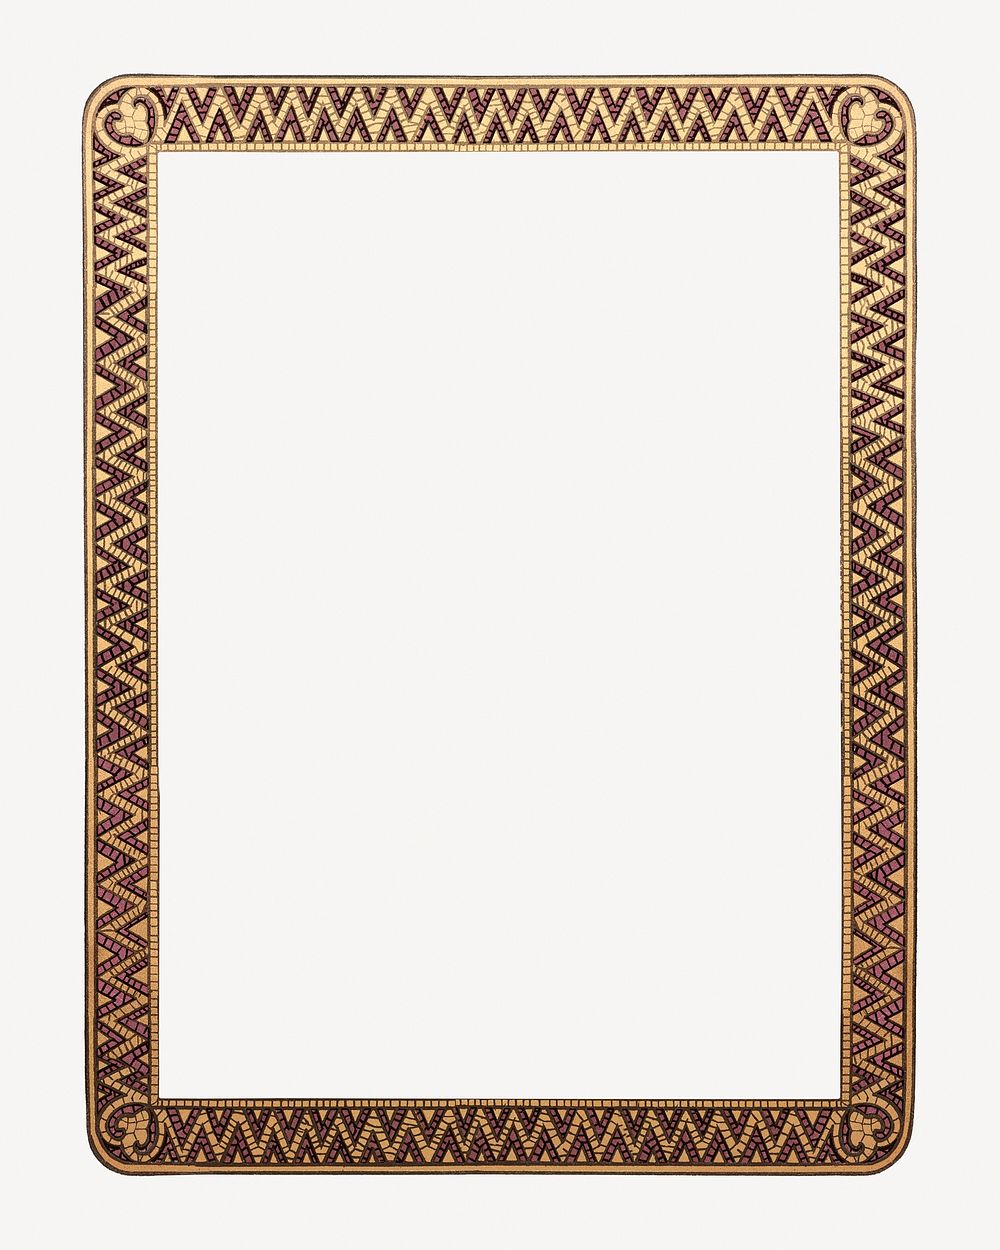 Alphonse Mucha's gold frame, vintage art deco psd